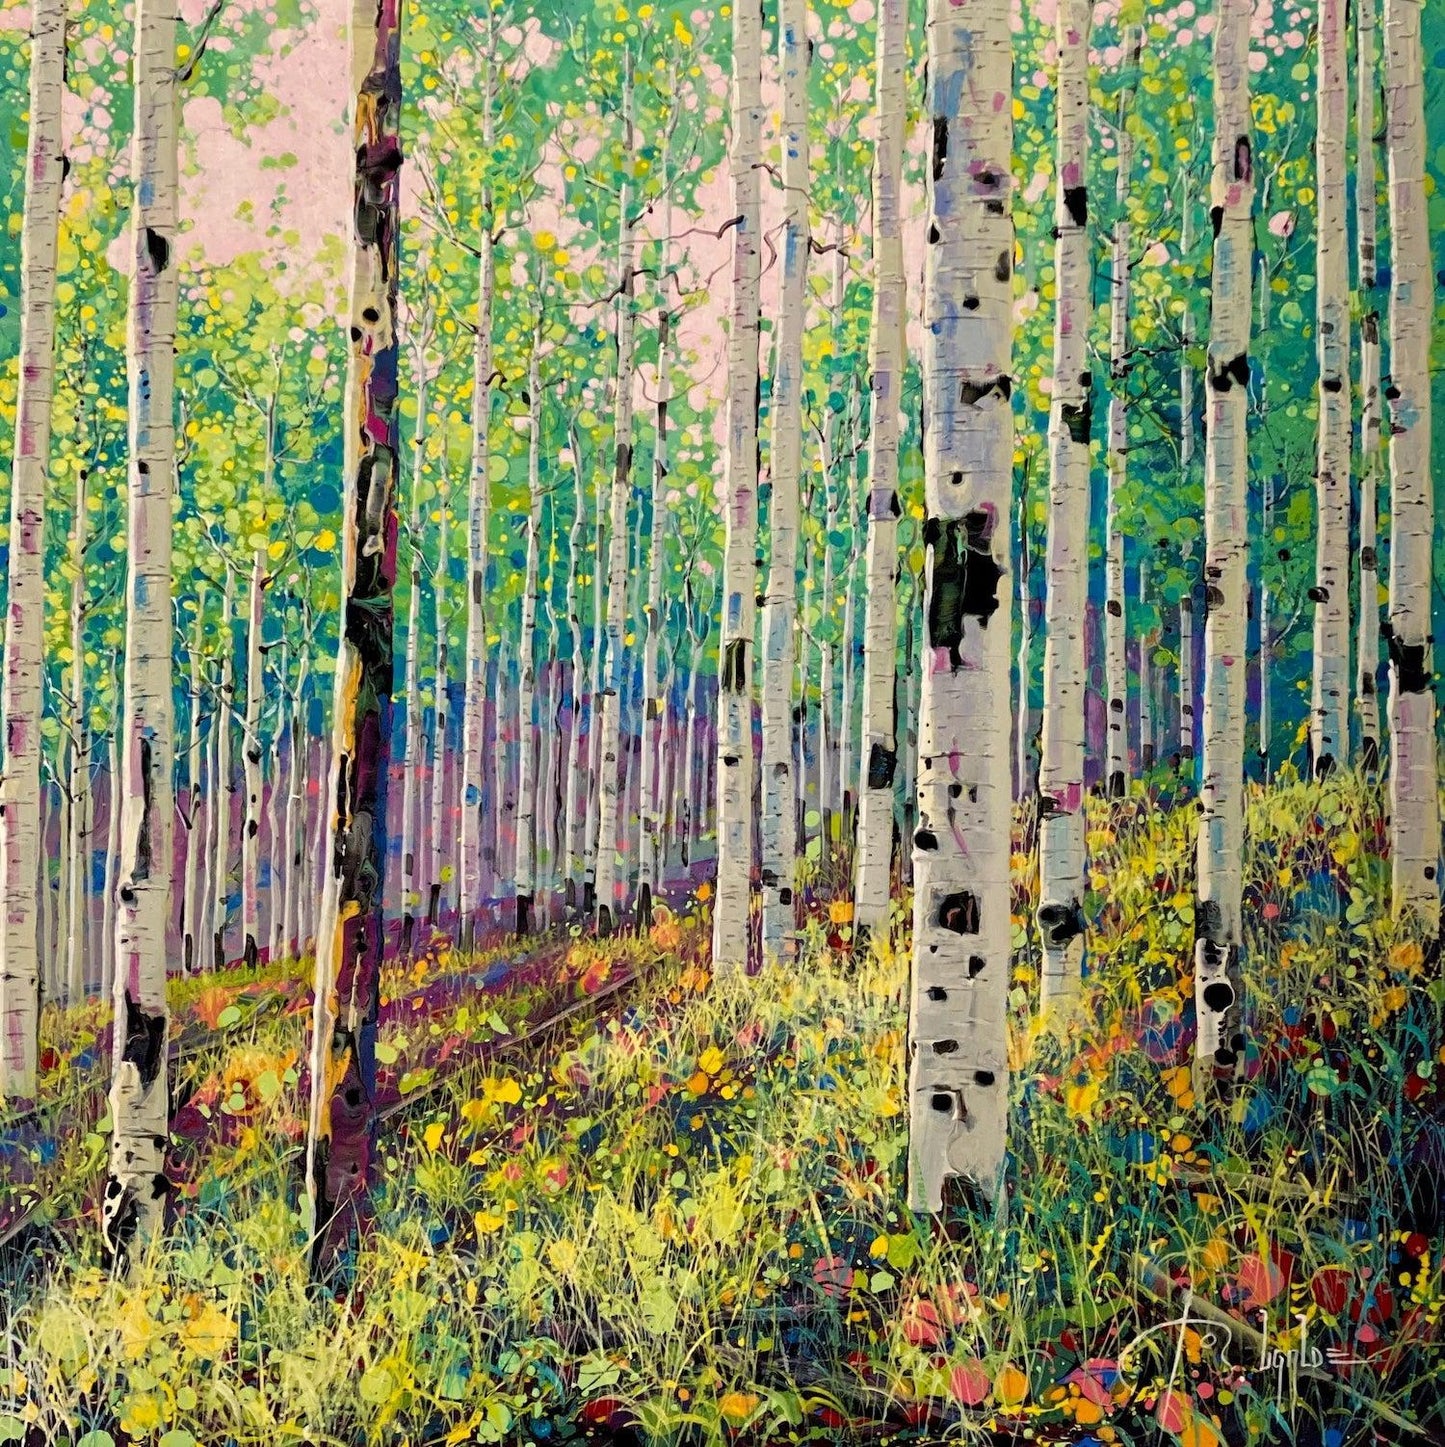 Aspen Grove Spring-Painting-Roberto Ugalde-Sorrel Sky Gallery